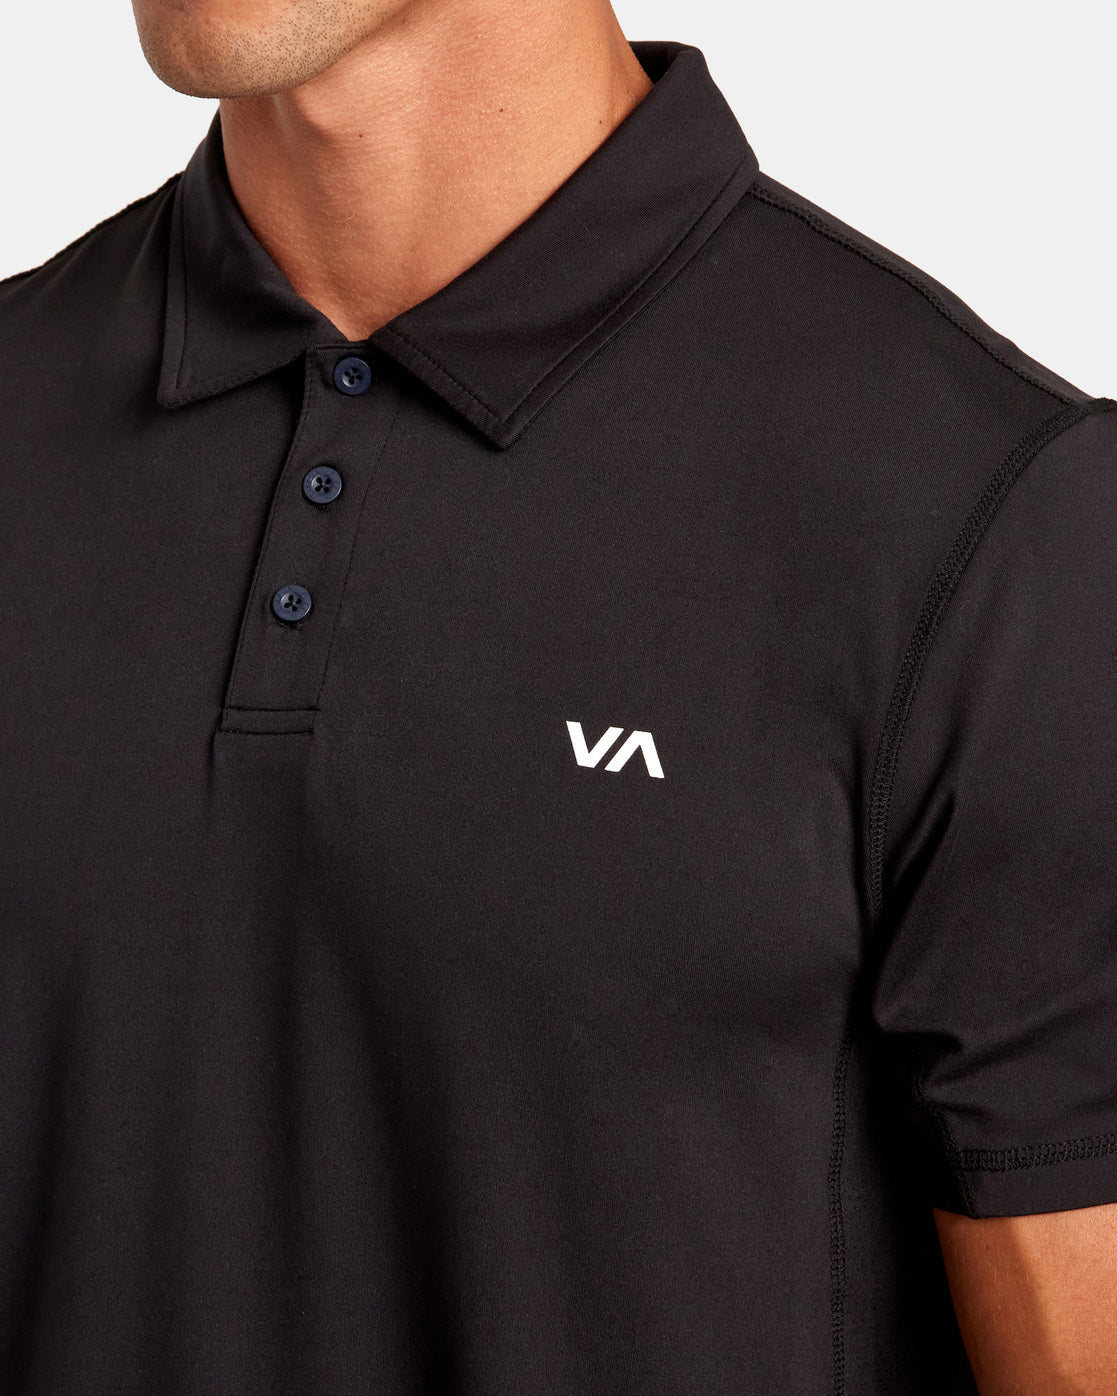 VA Sport Vent Technical Polo Shirt - Black